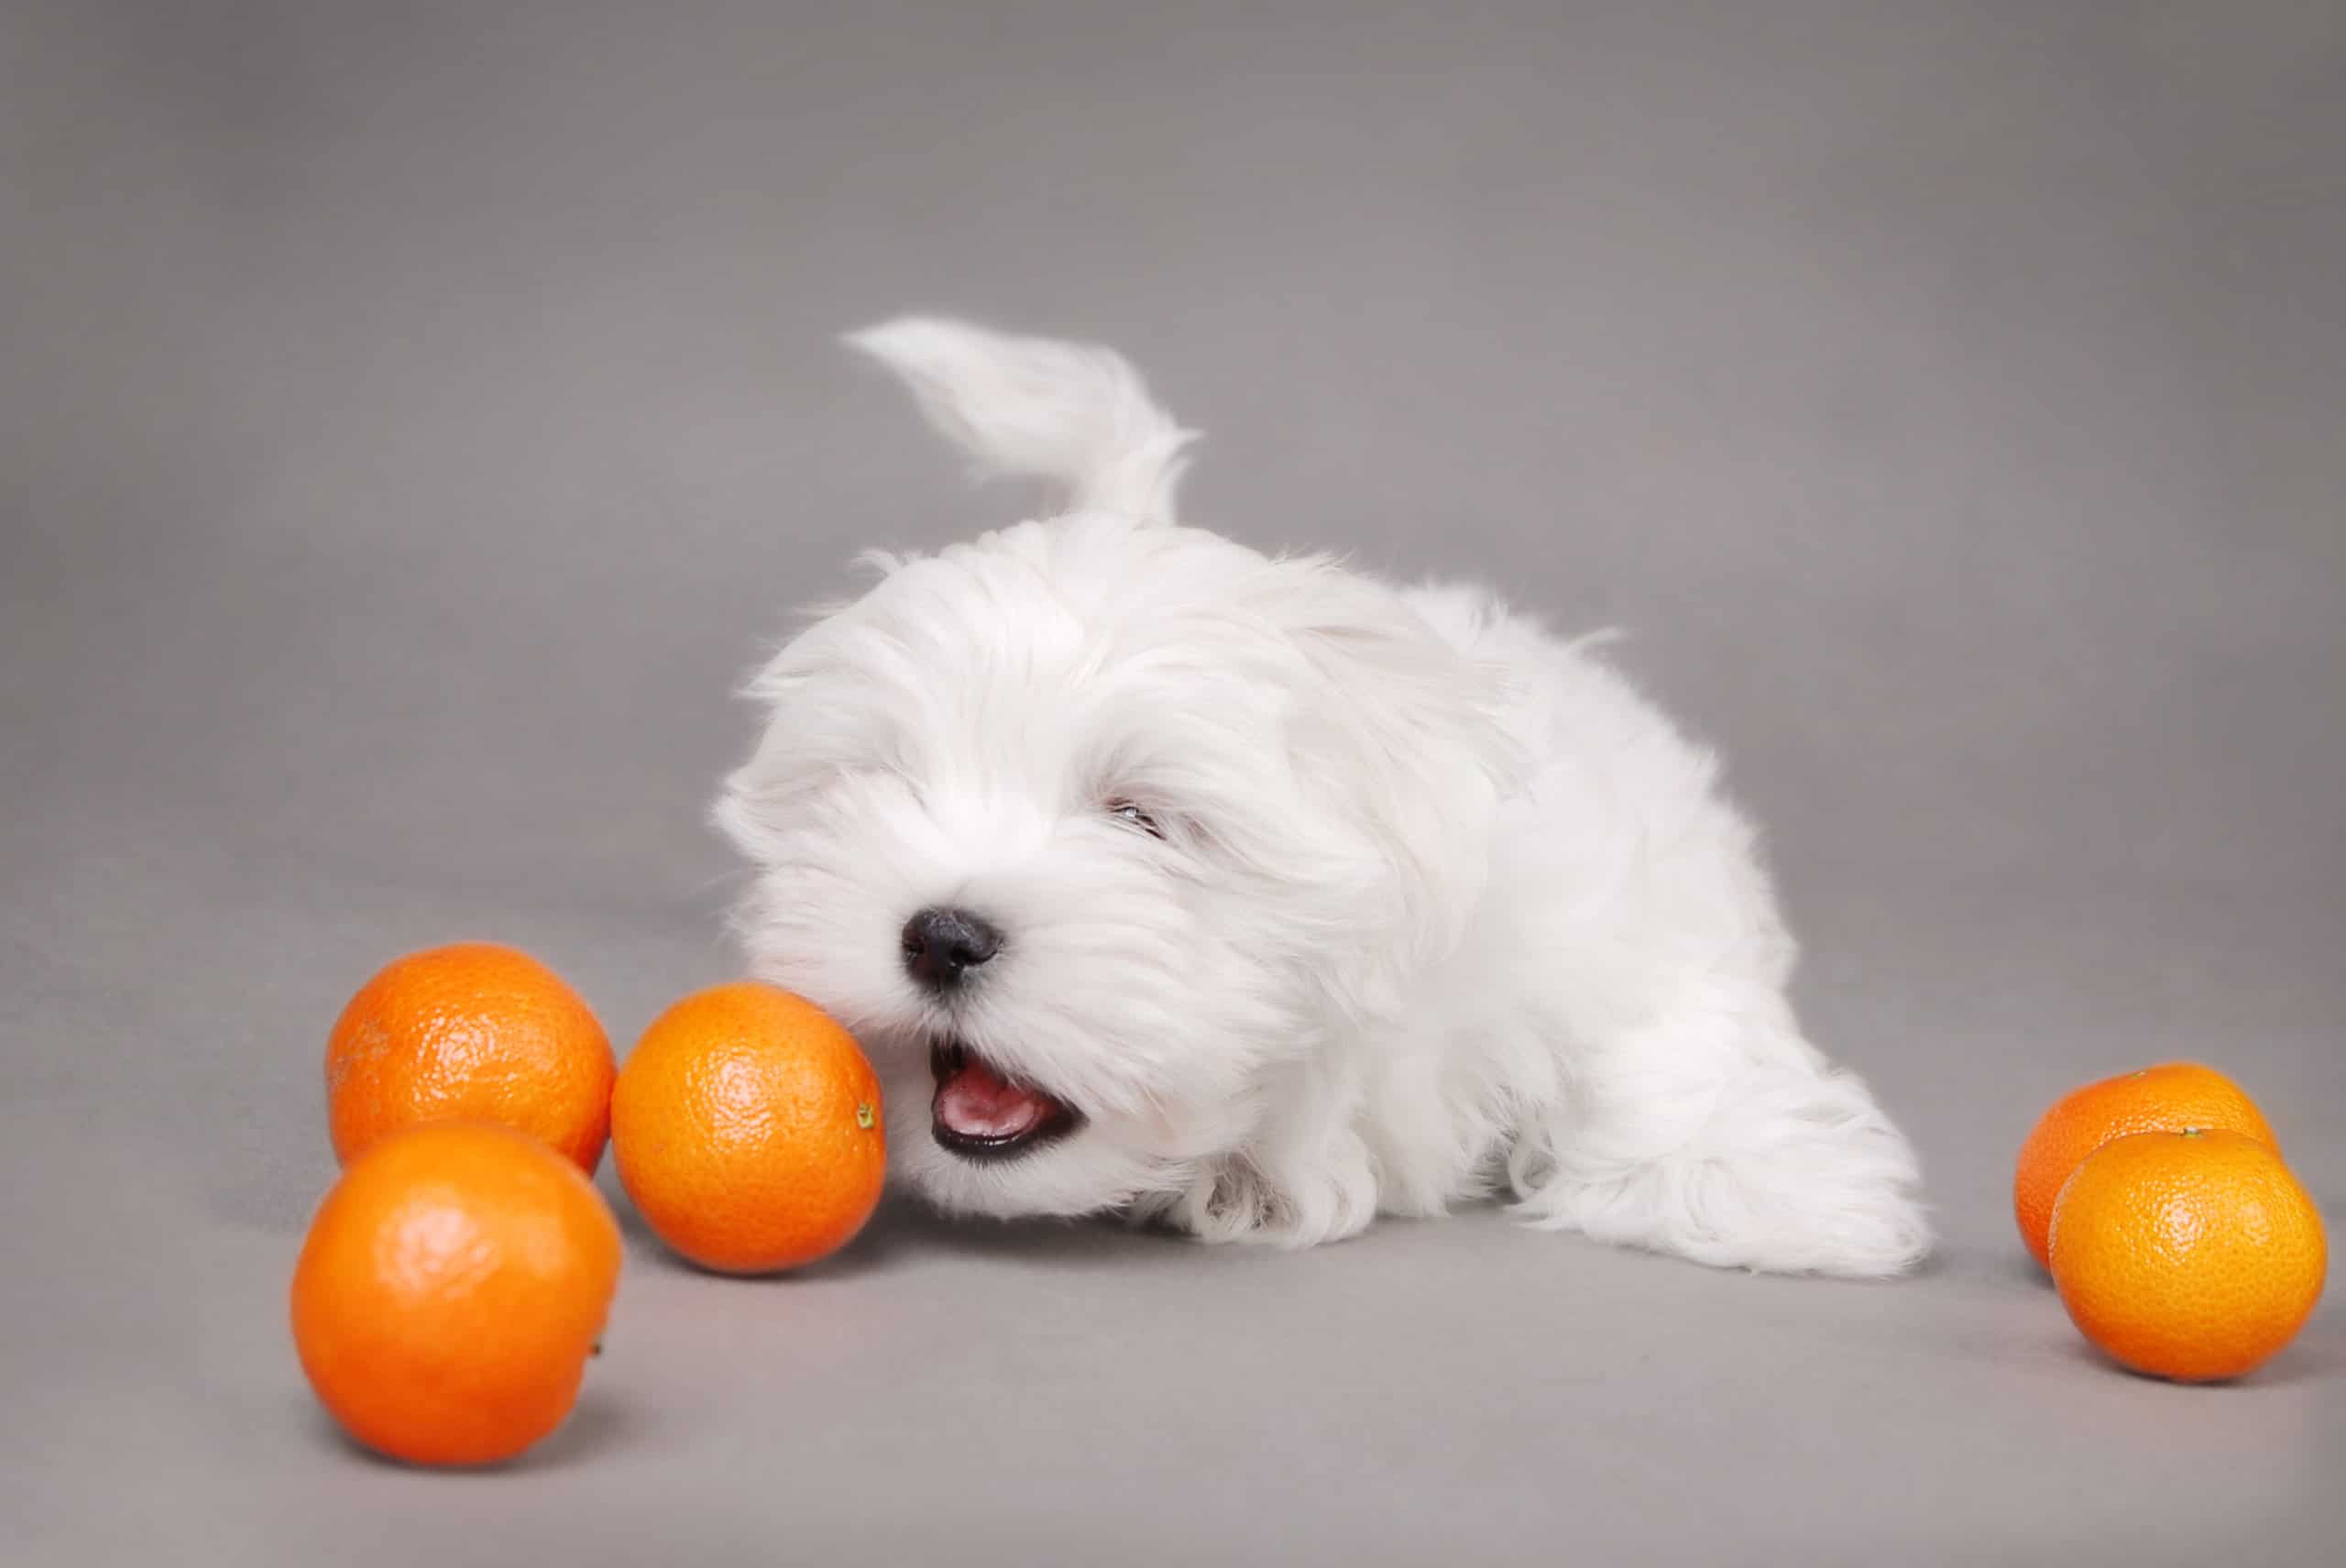 Can Dogs Drink Orange Juice Safely? - AZ Animals